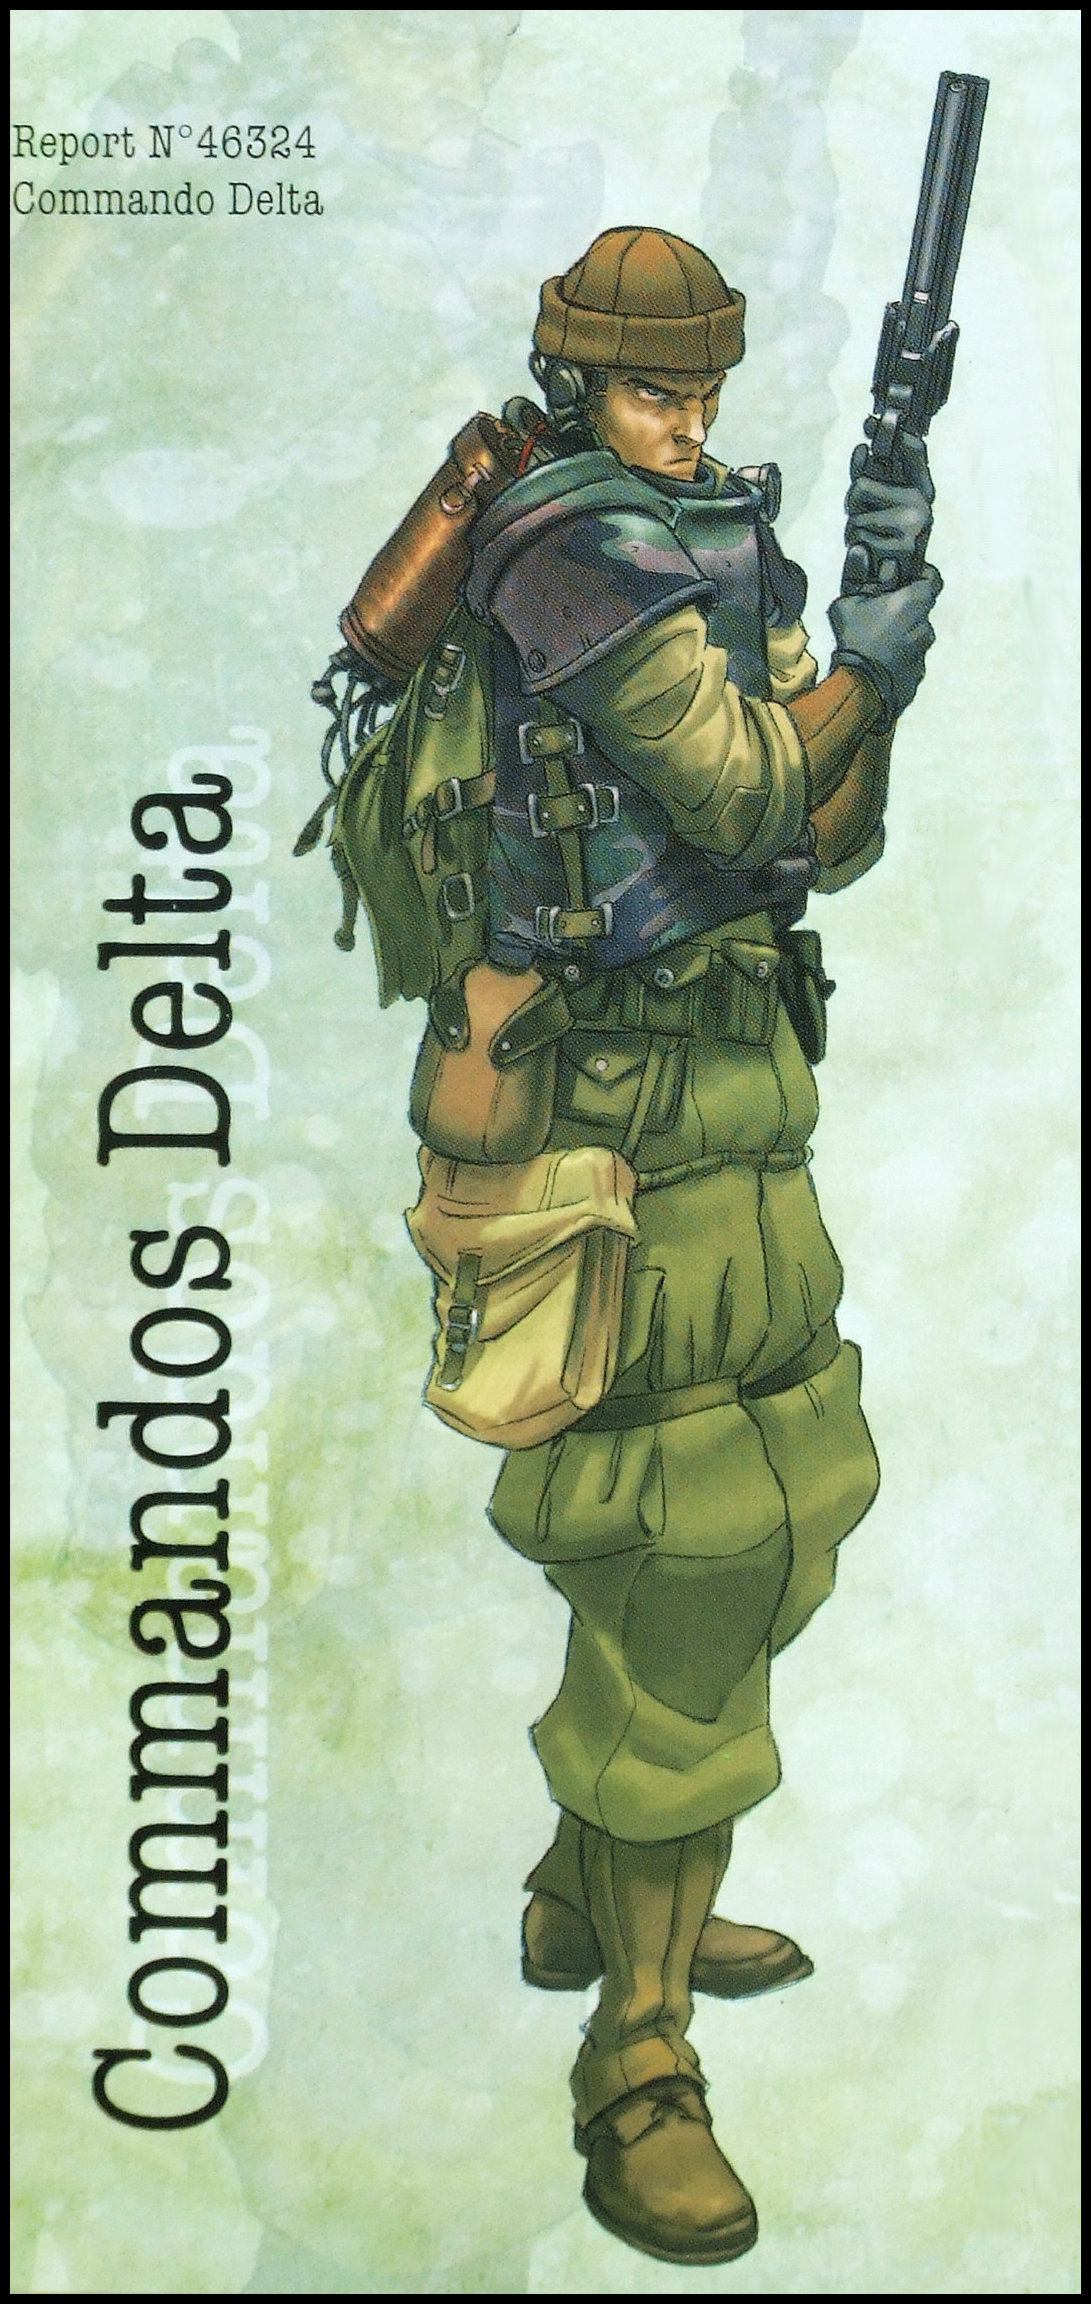 Tannhauser - Rulebook Artwork, Commandos Delta